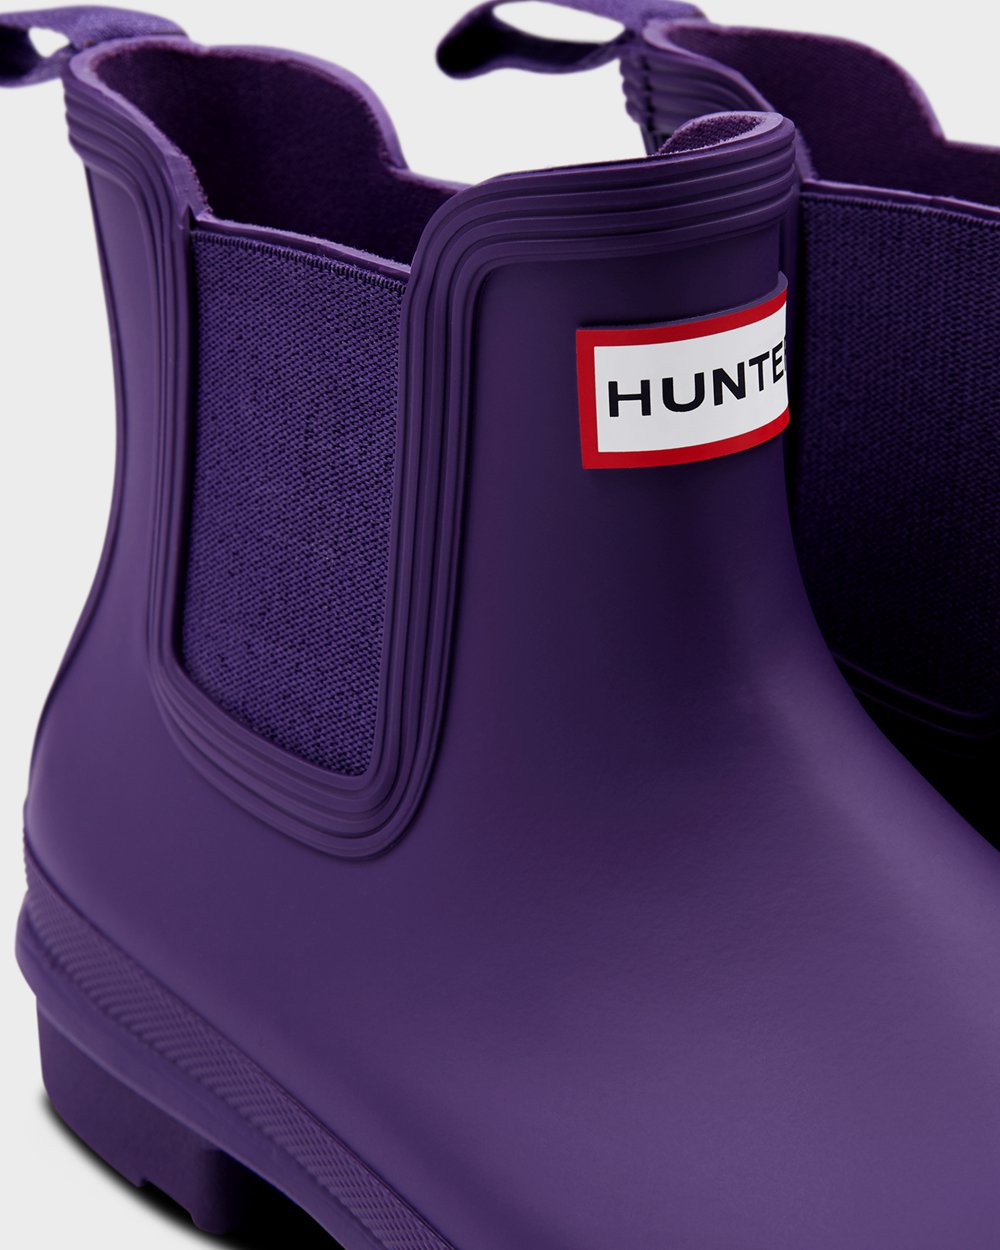 Womens Chelsea Boots - Hunter Original (03SFRTYQE) - Blue Purple